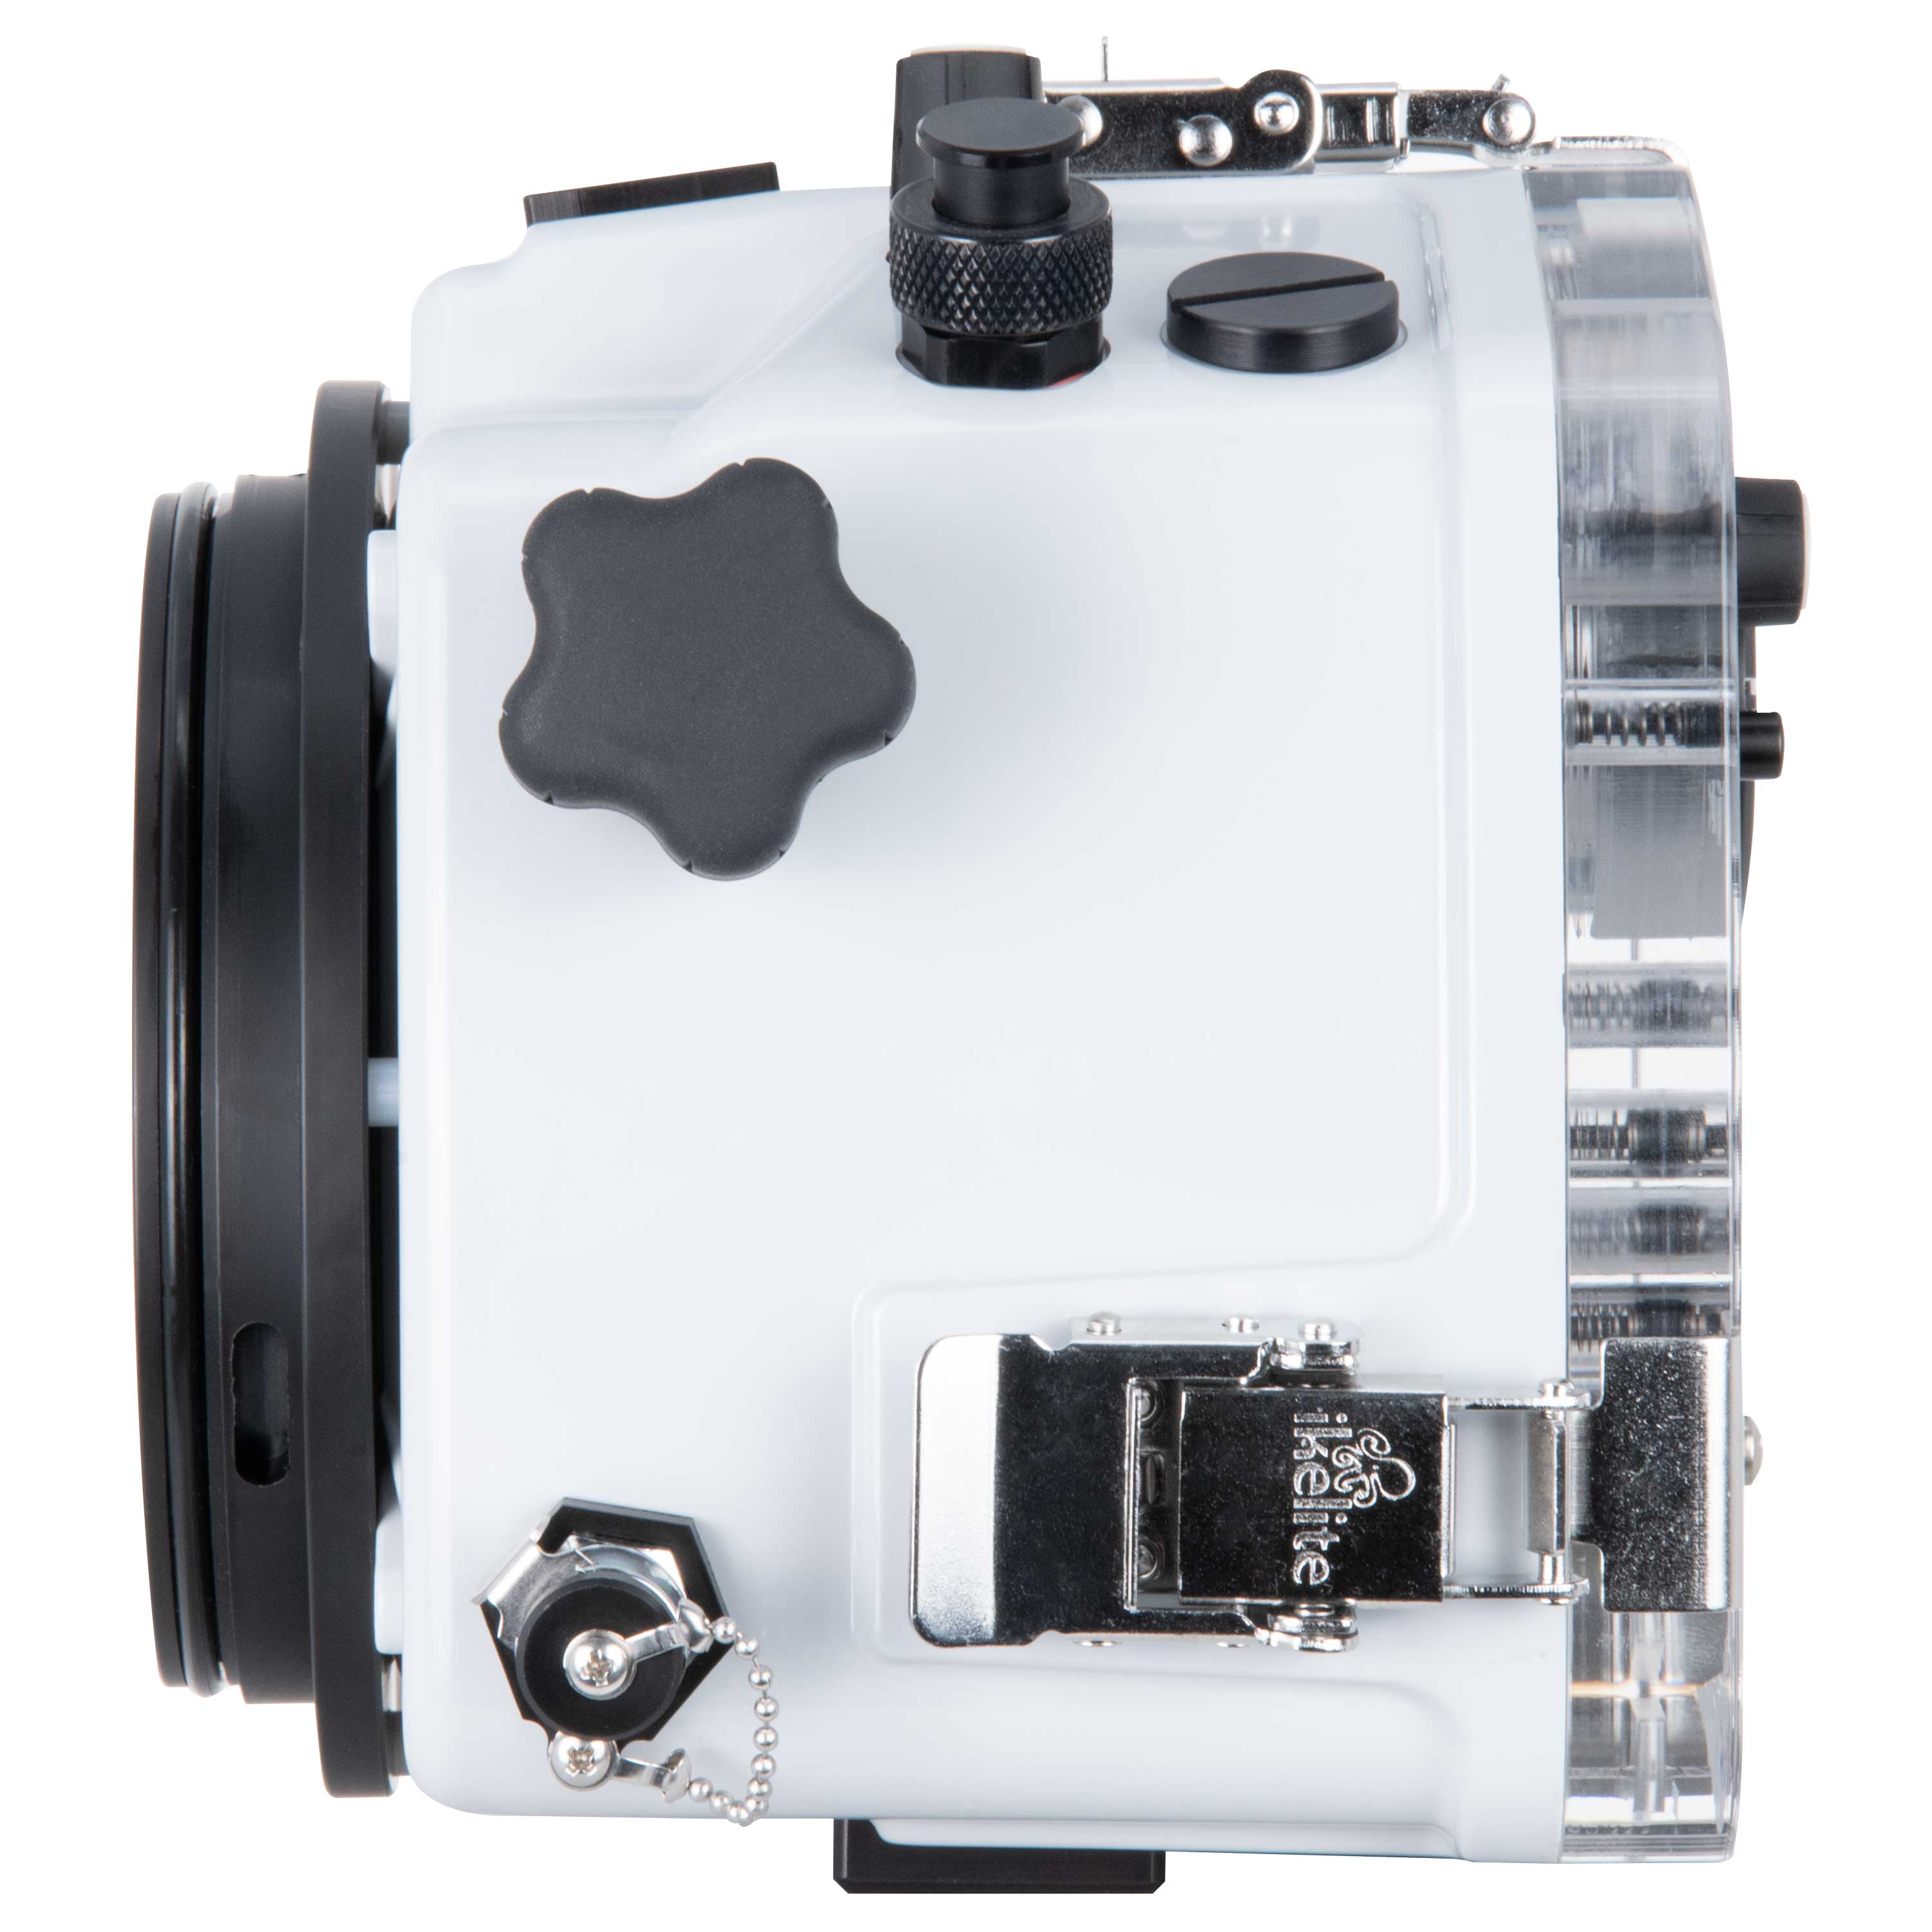 Ikelite 200DL Underwater Housing for Fujifilm X-T4 Mirrorless Digital Camera